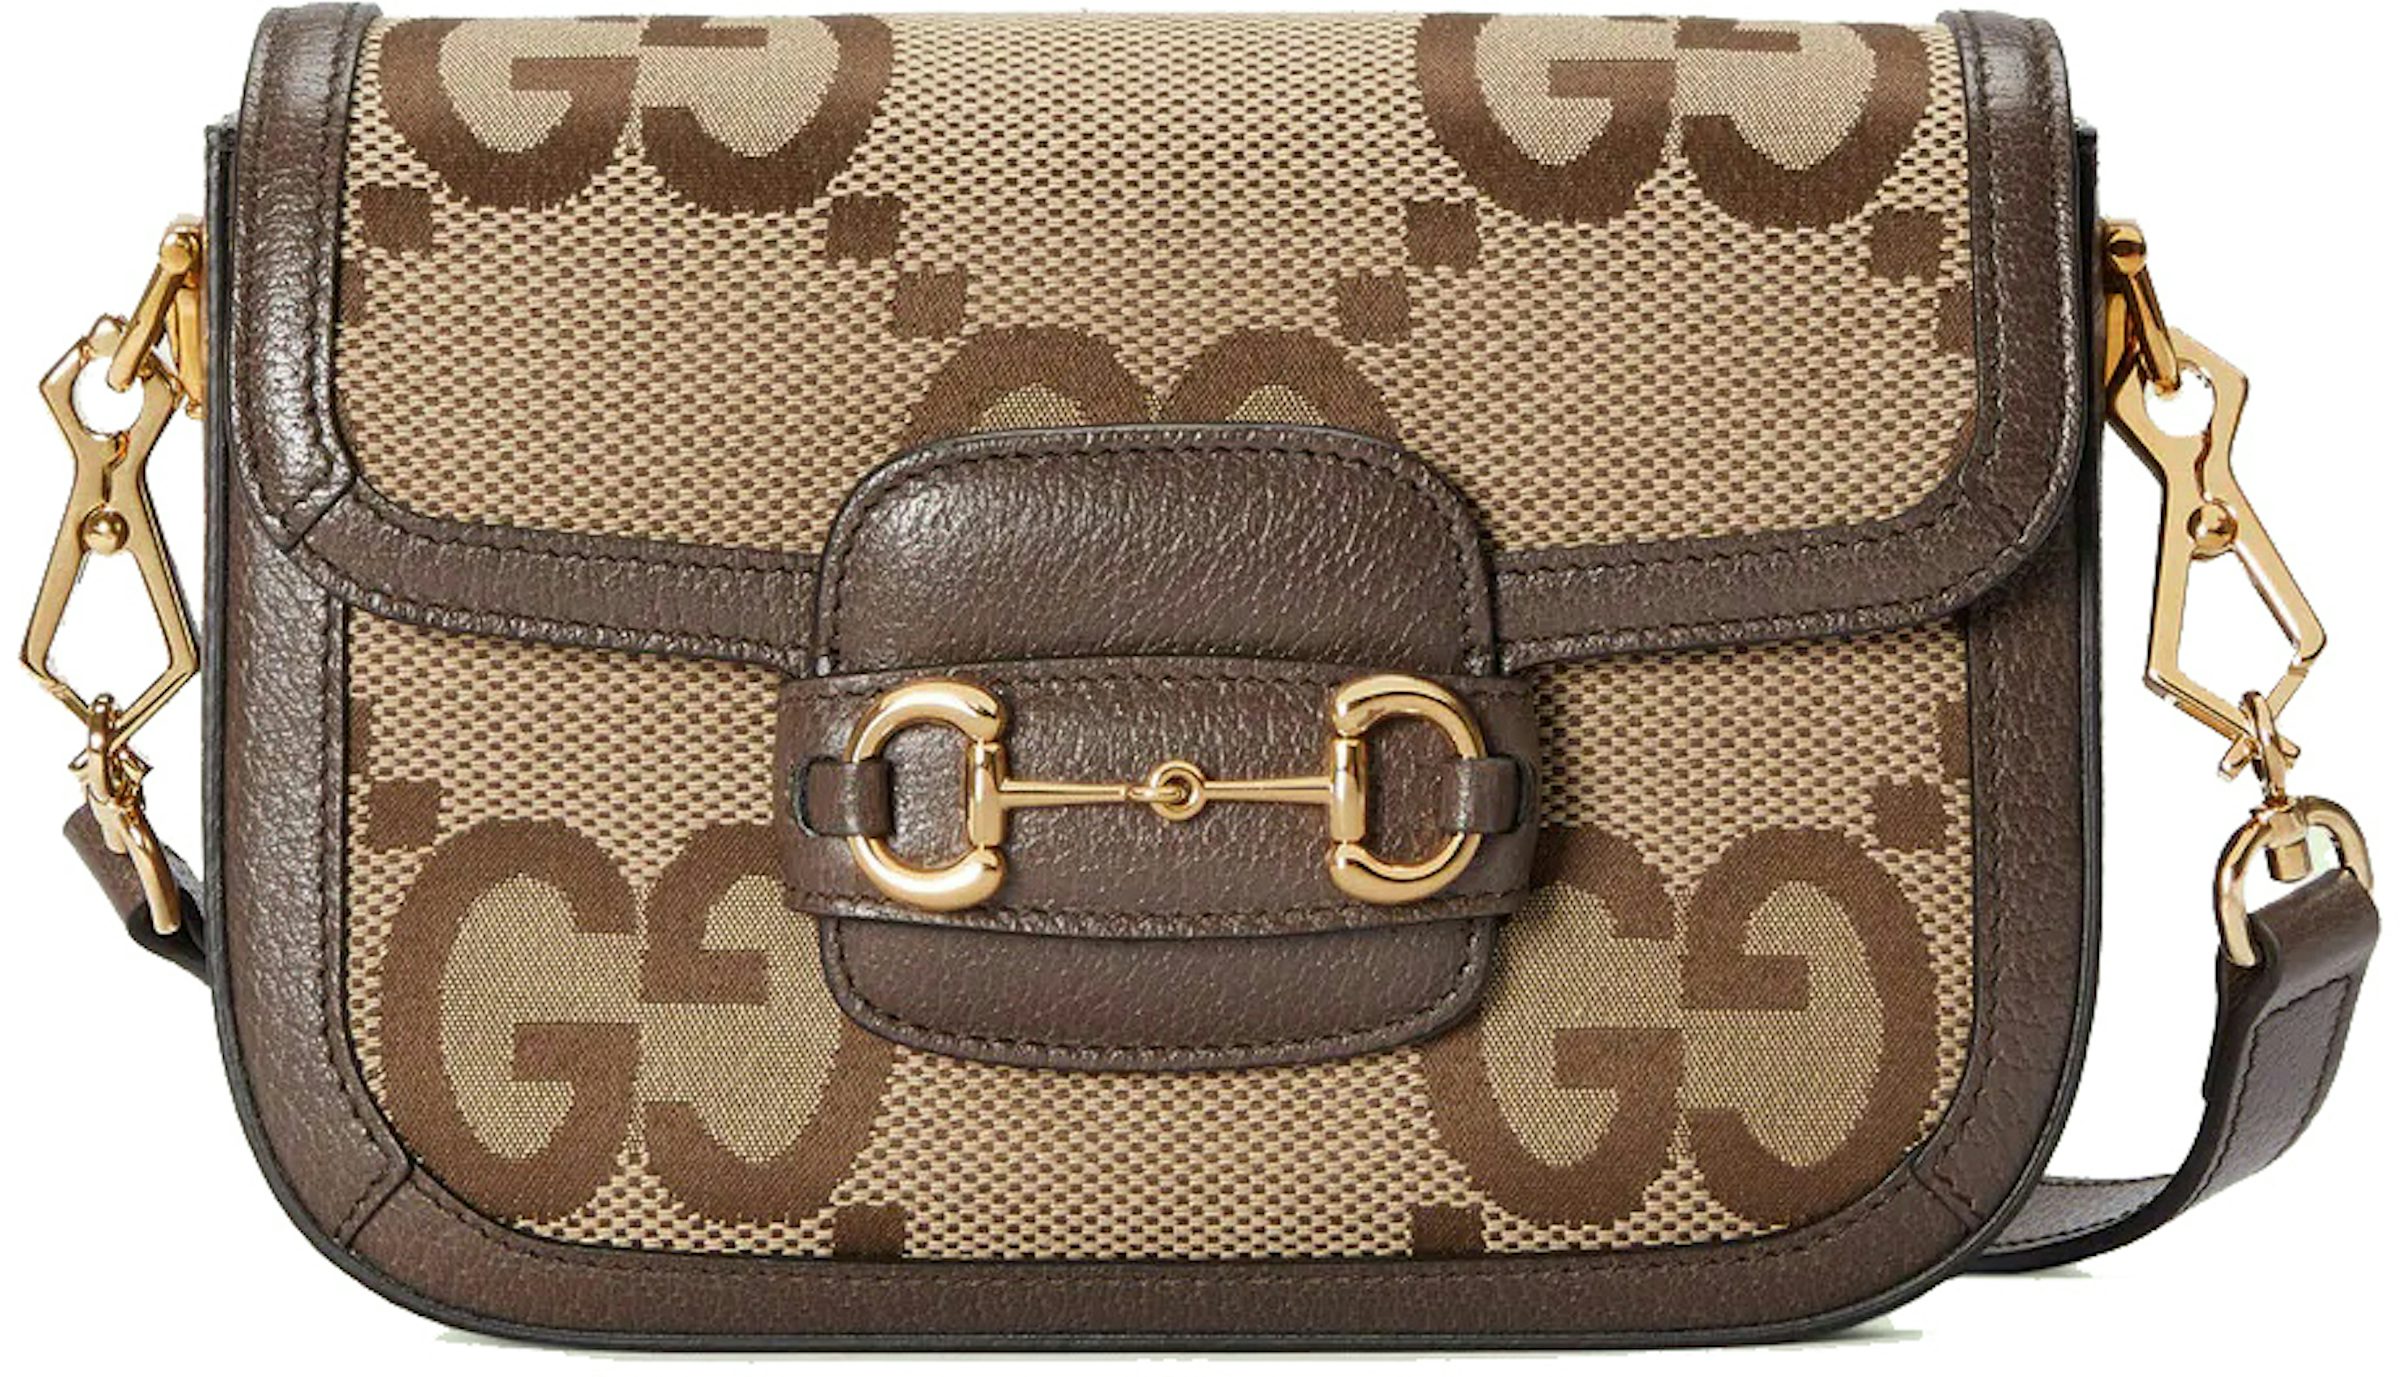 Gucci Horsebit 1955 jumbo GG mini bag